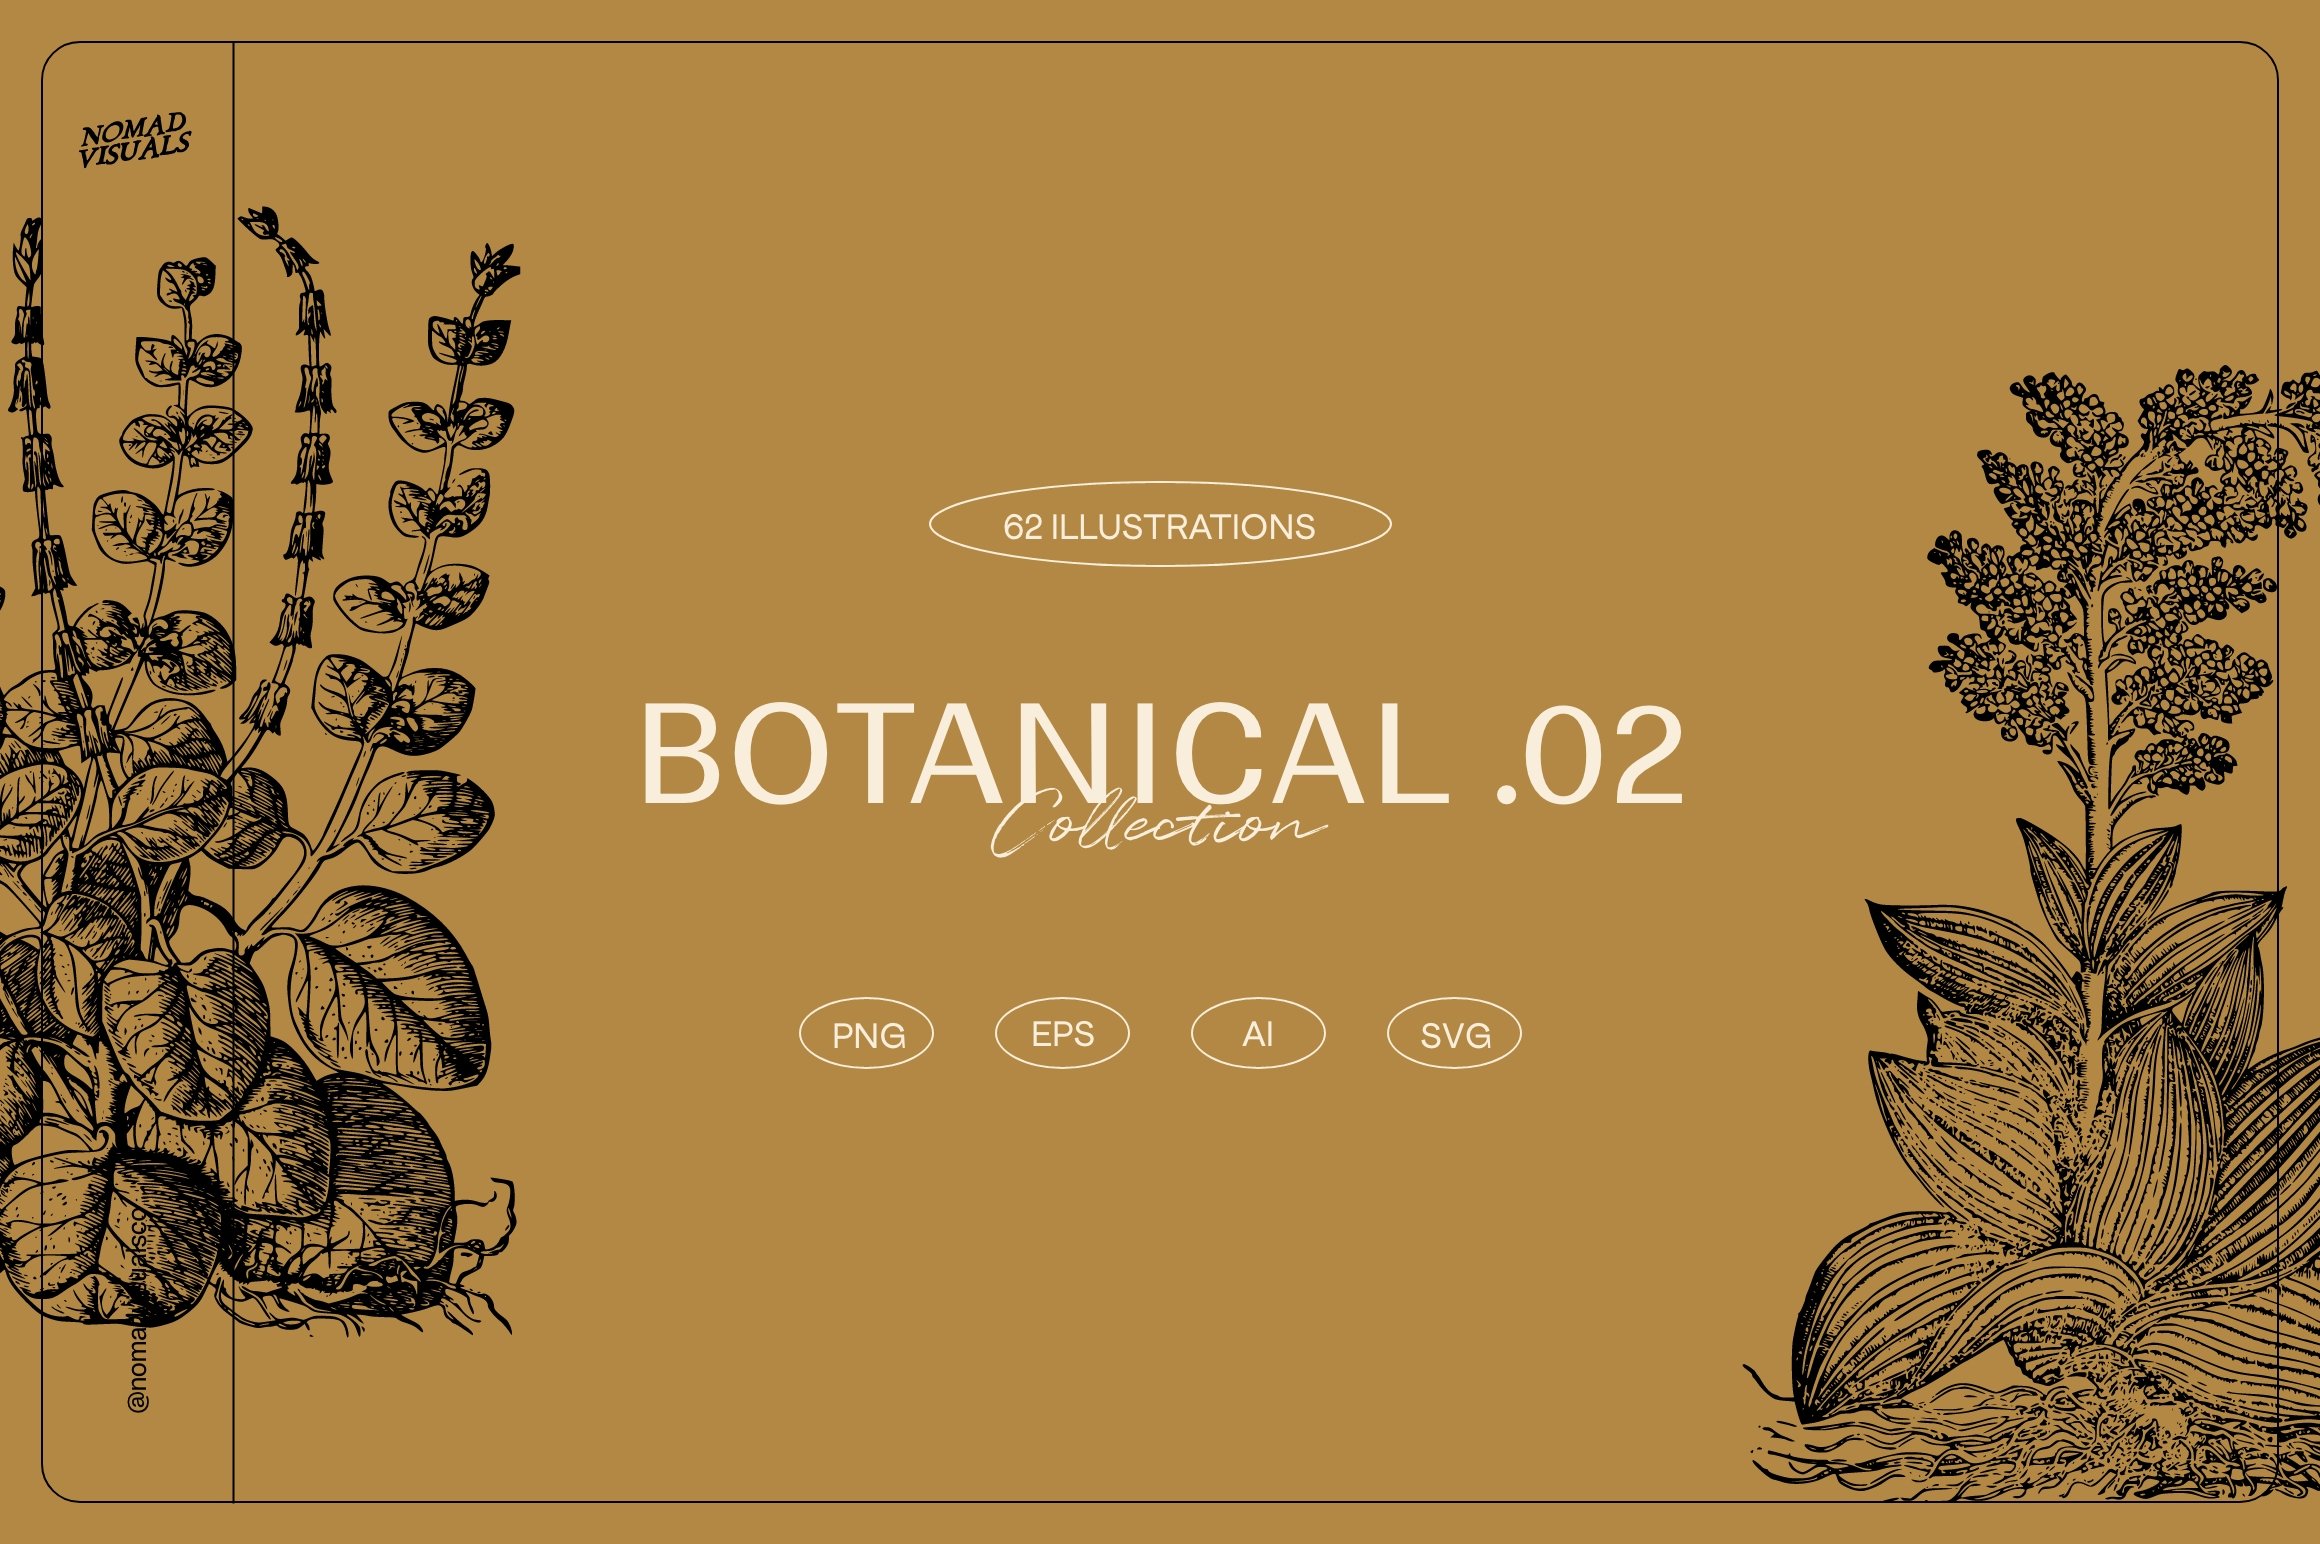 Botanical illustrations vol 2.